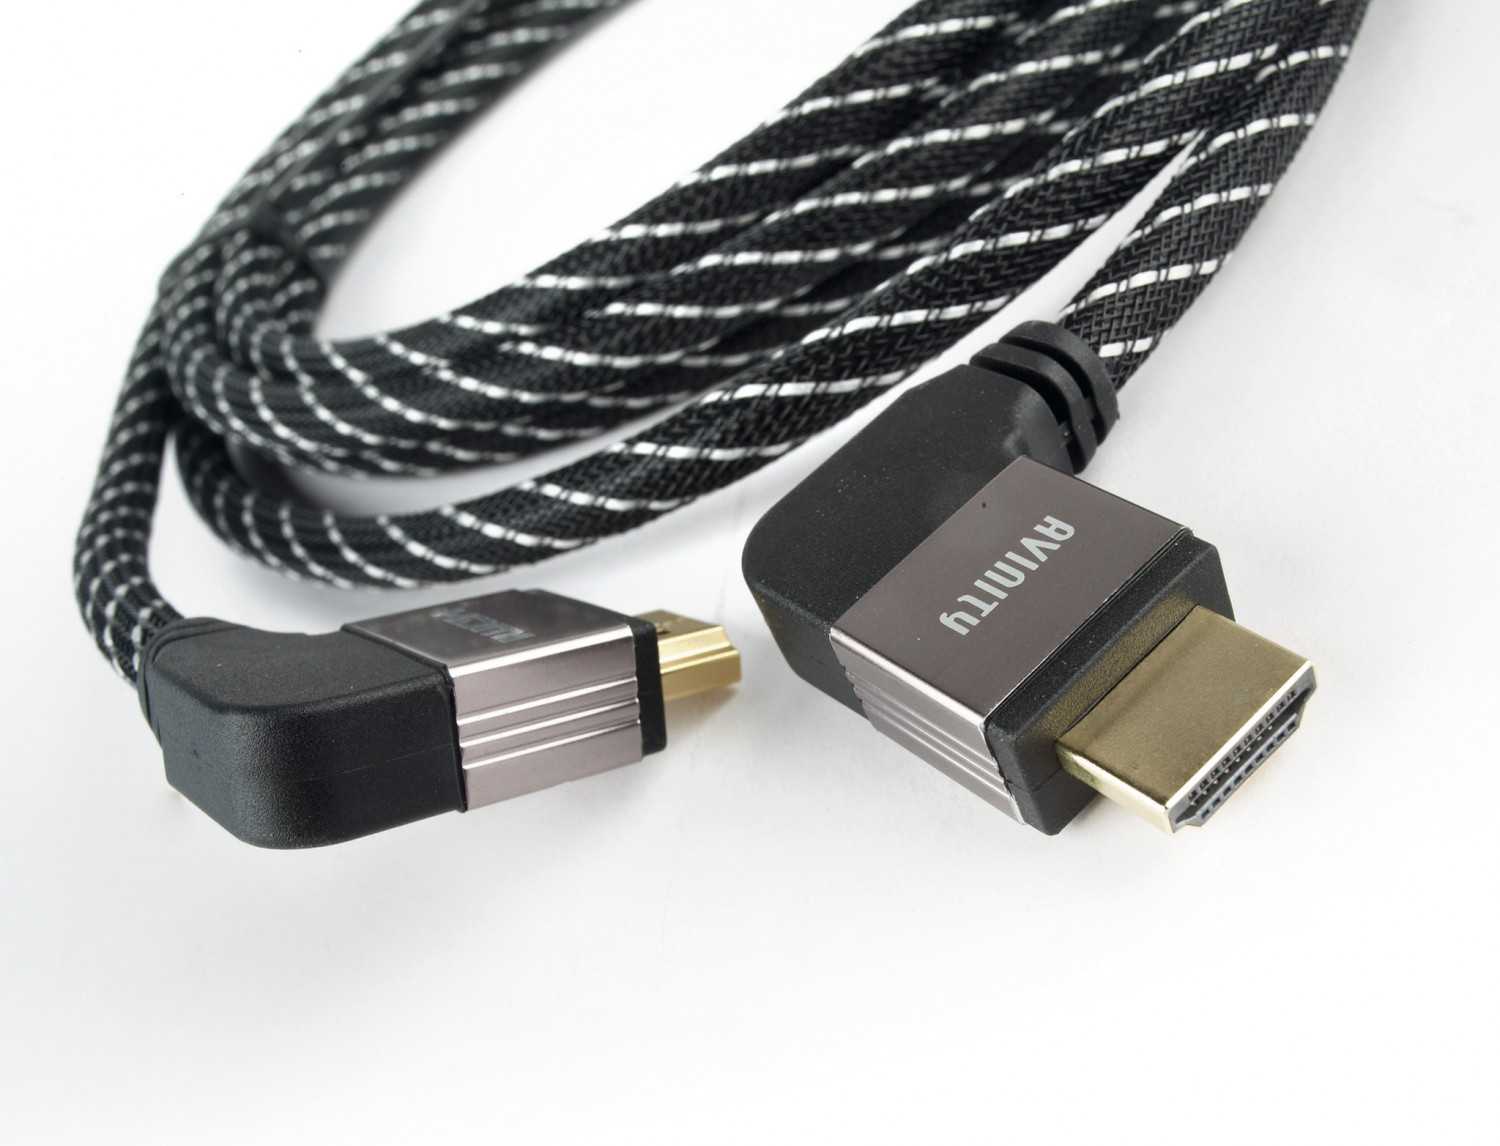 HDMI Kabel Avinity Classic Line 2* im Test, Bild 1